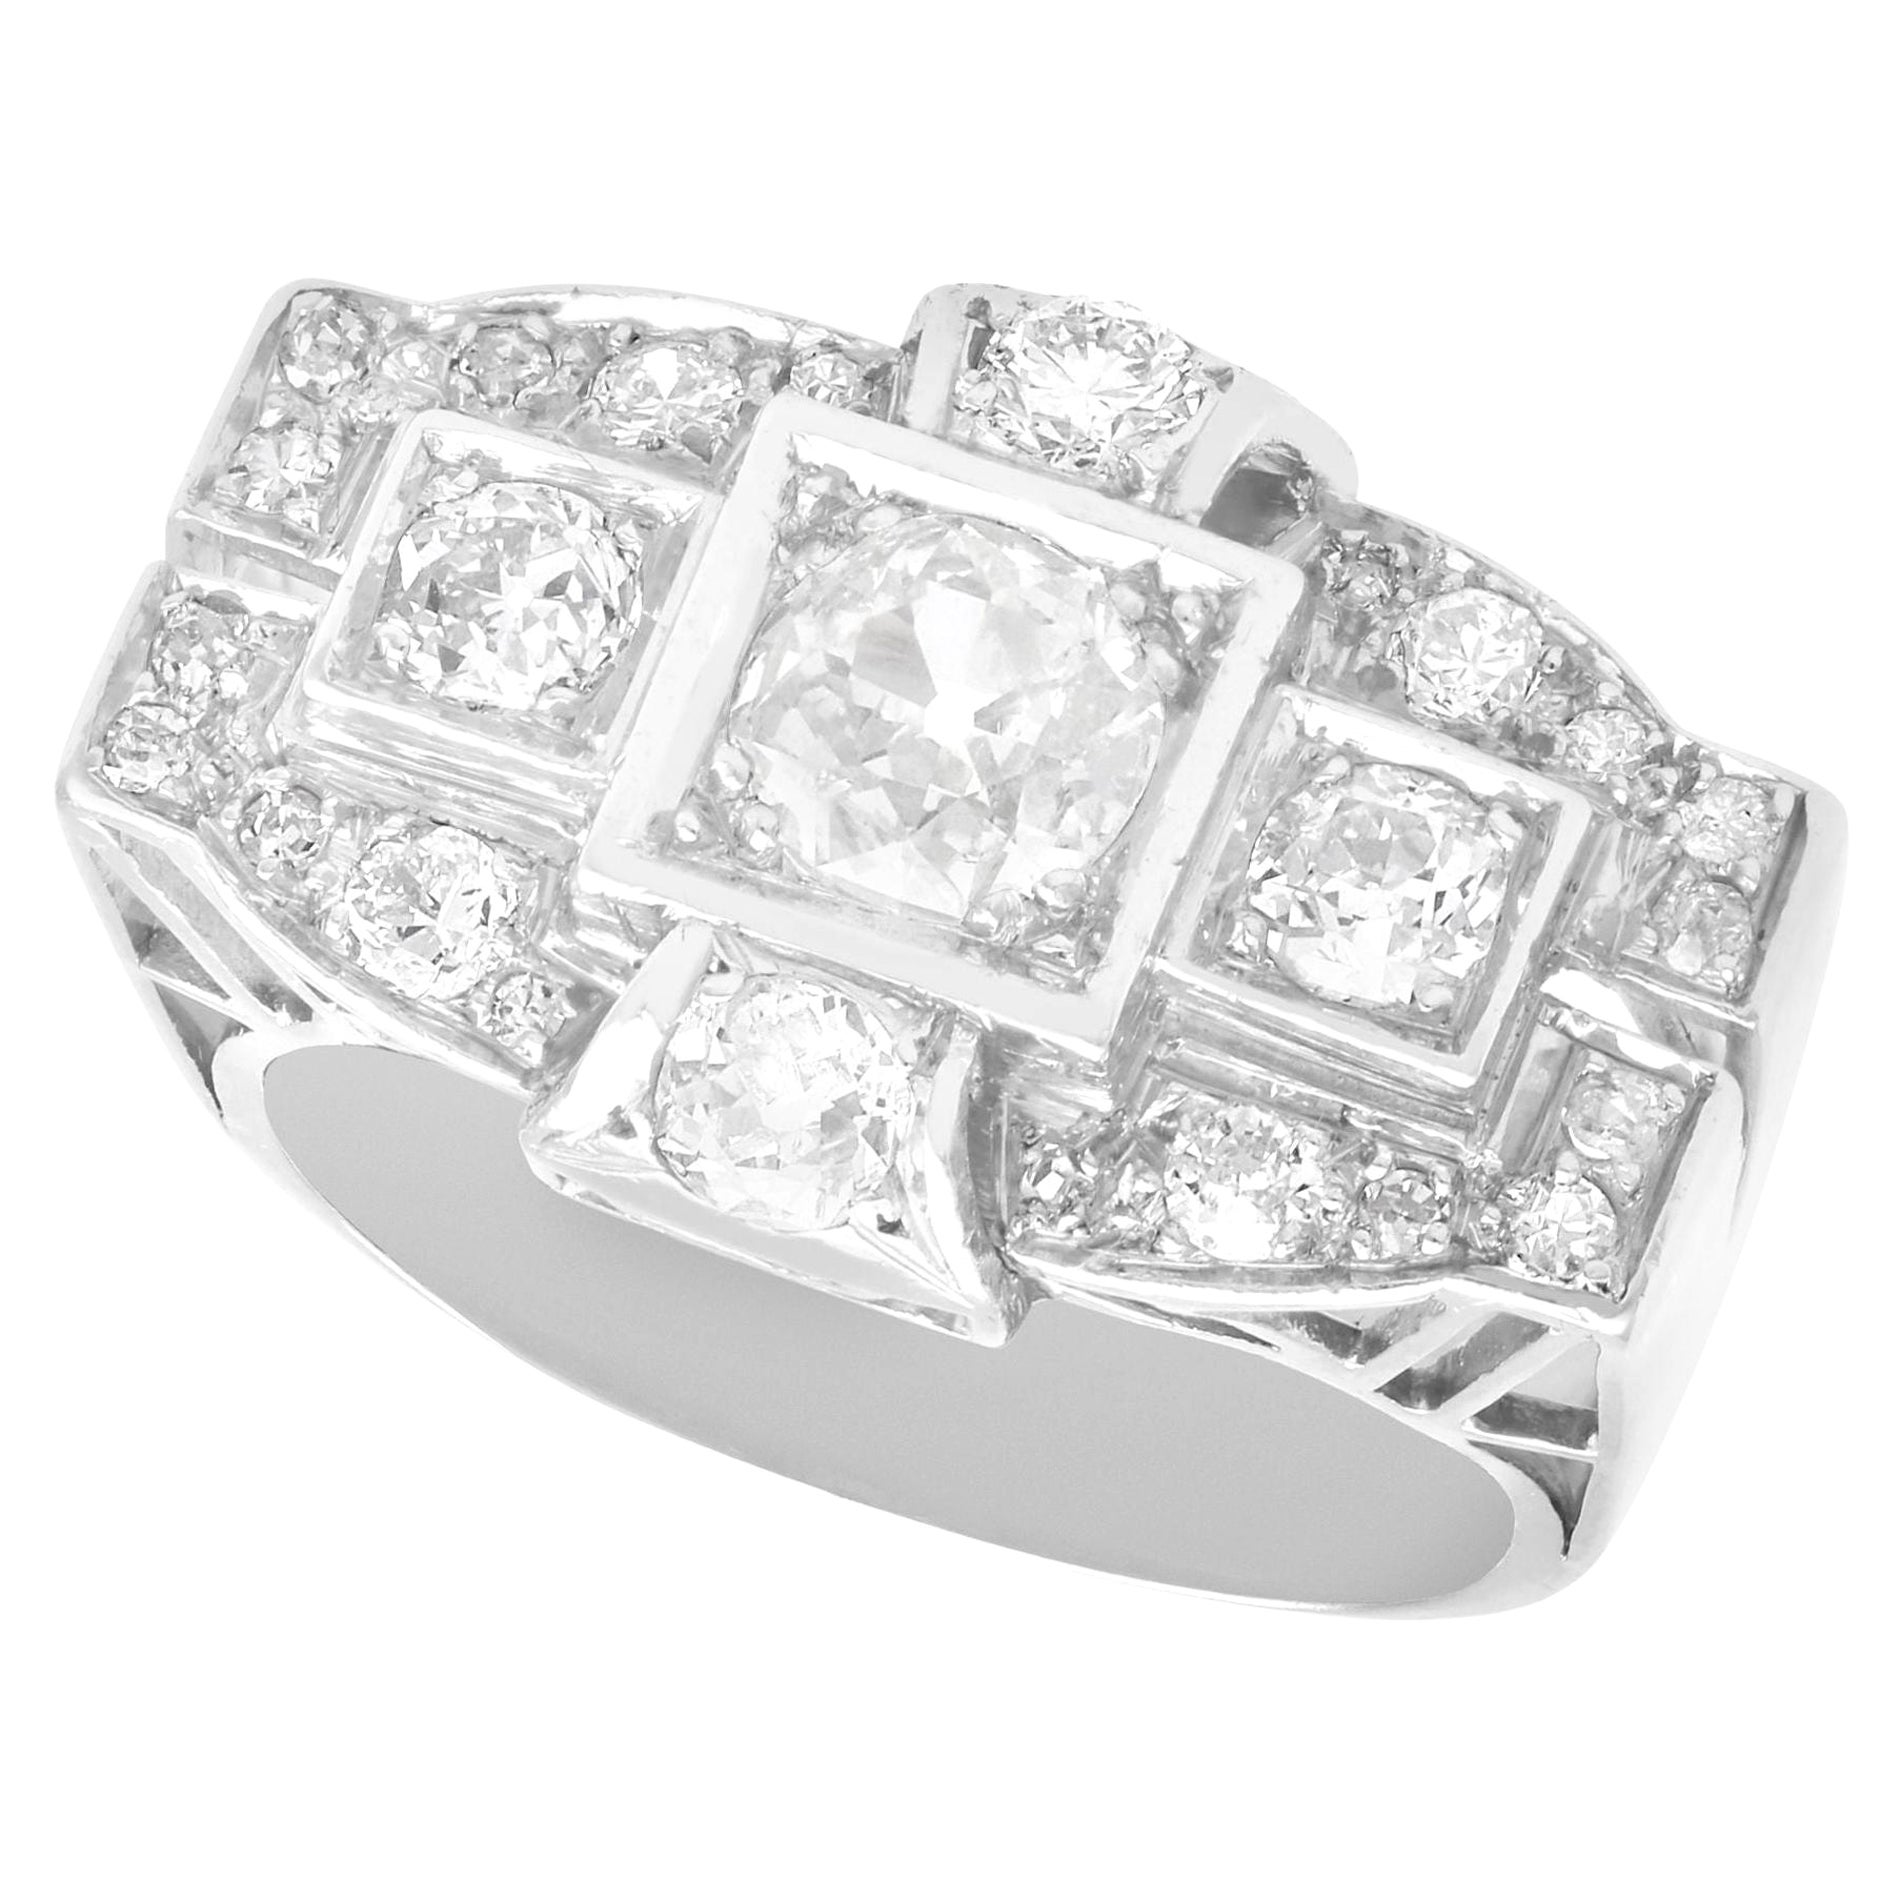 Antique Art Deco 1.73 Carat Diamond and Platinum Cocktail Ring For Sale